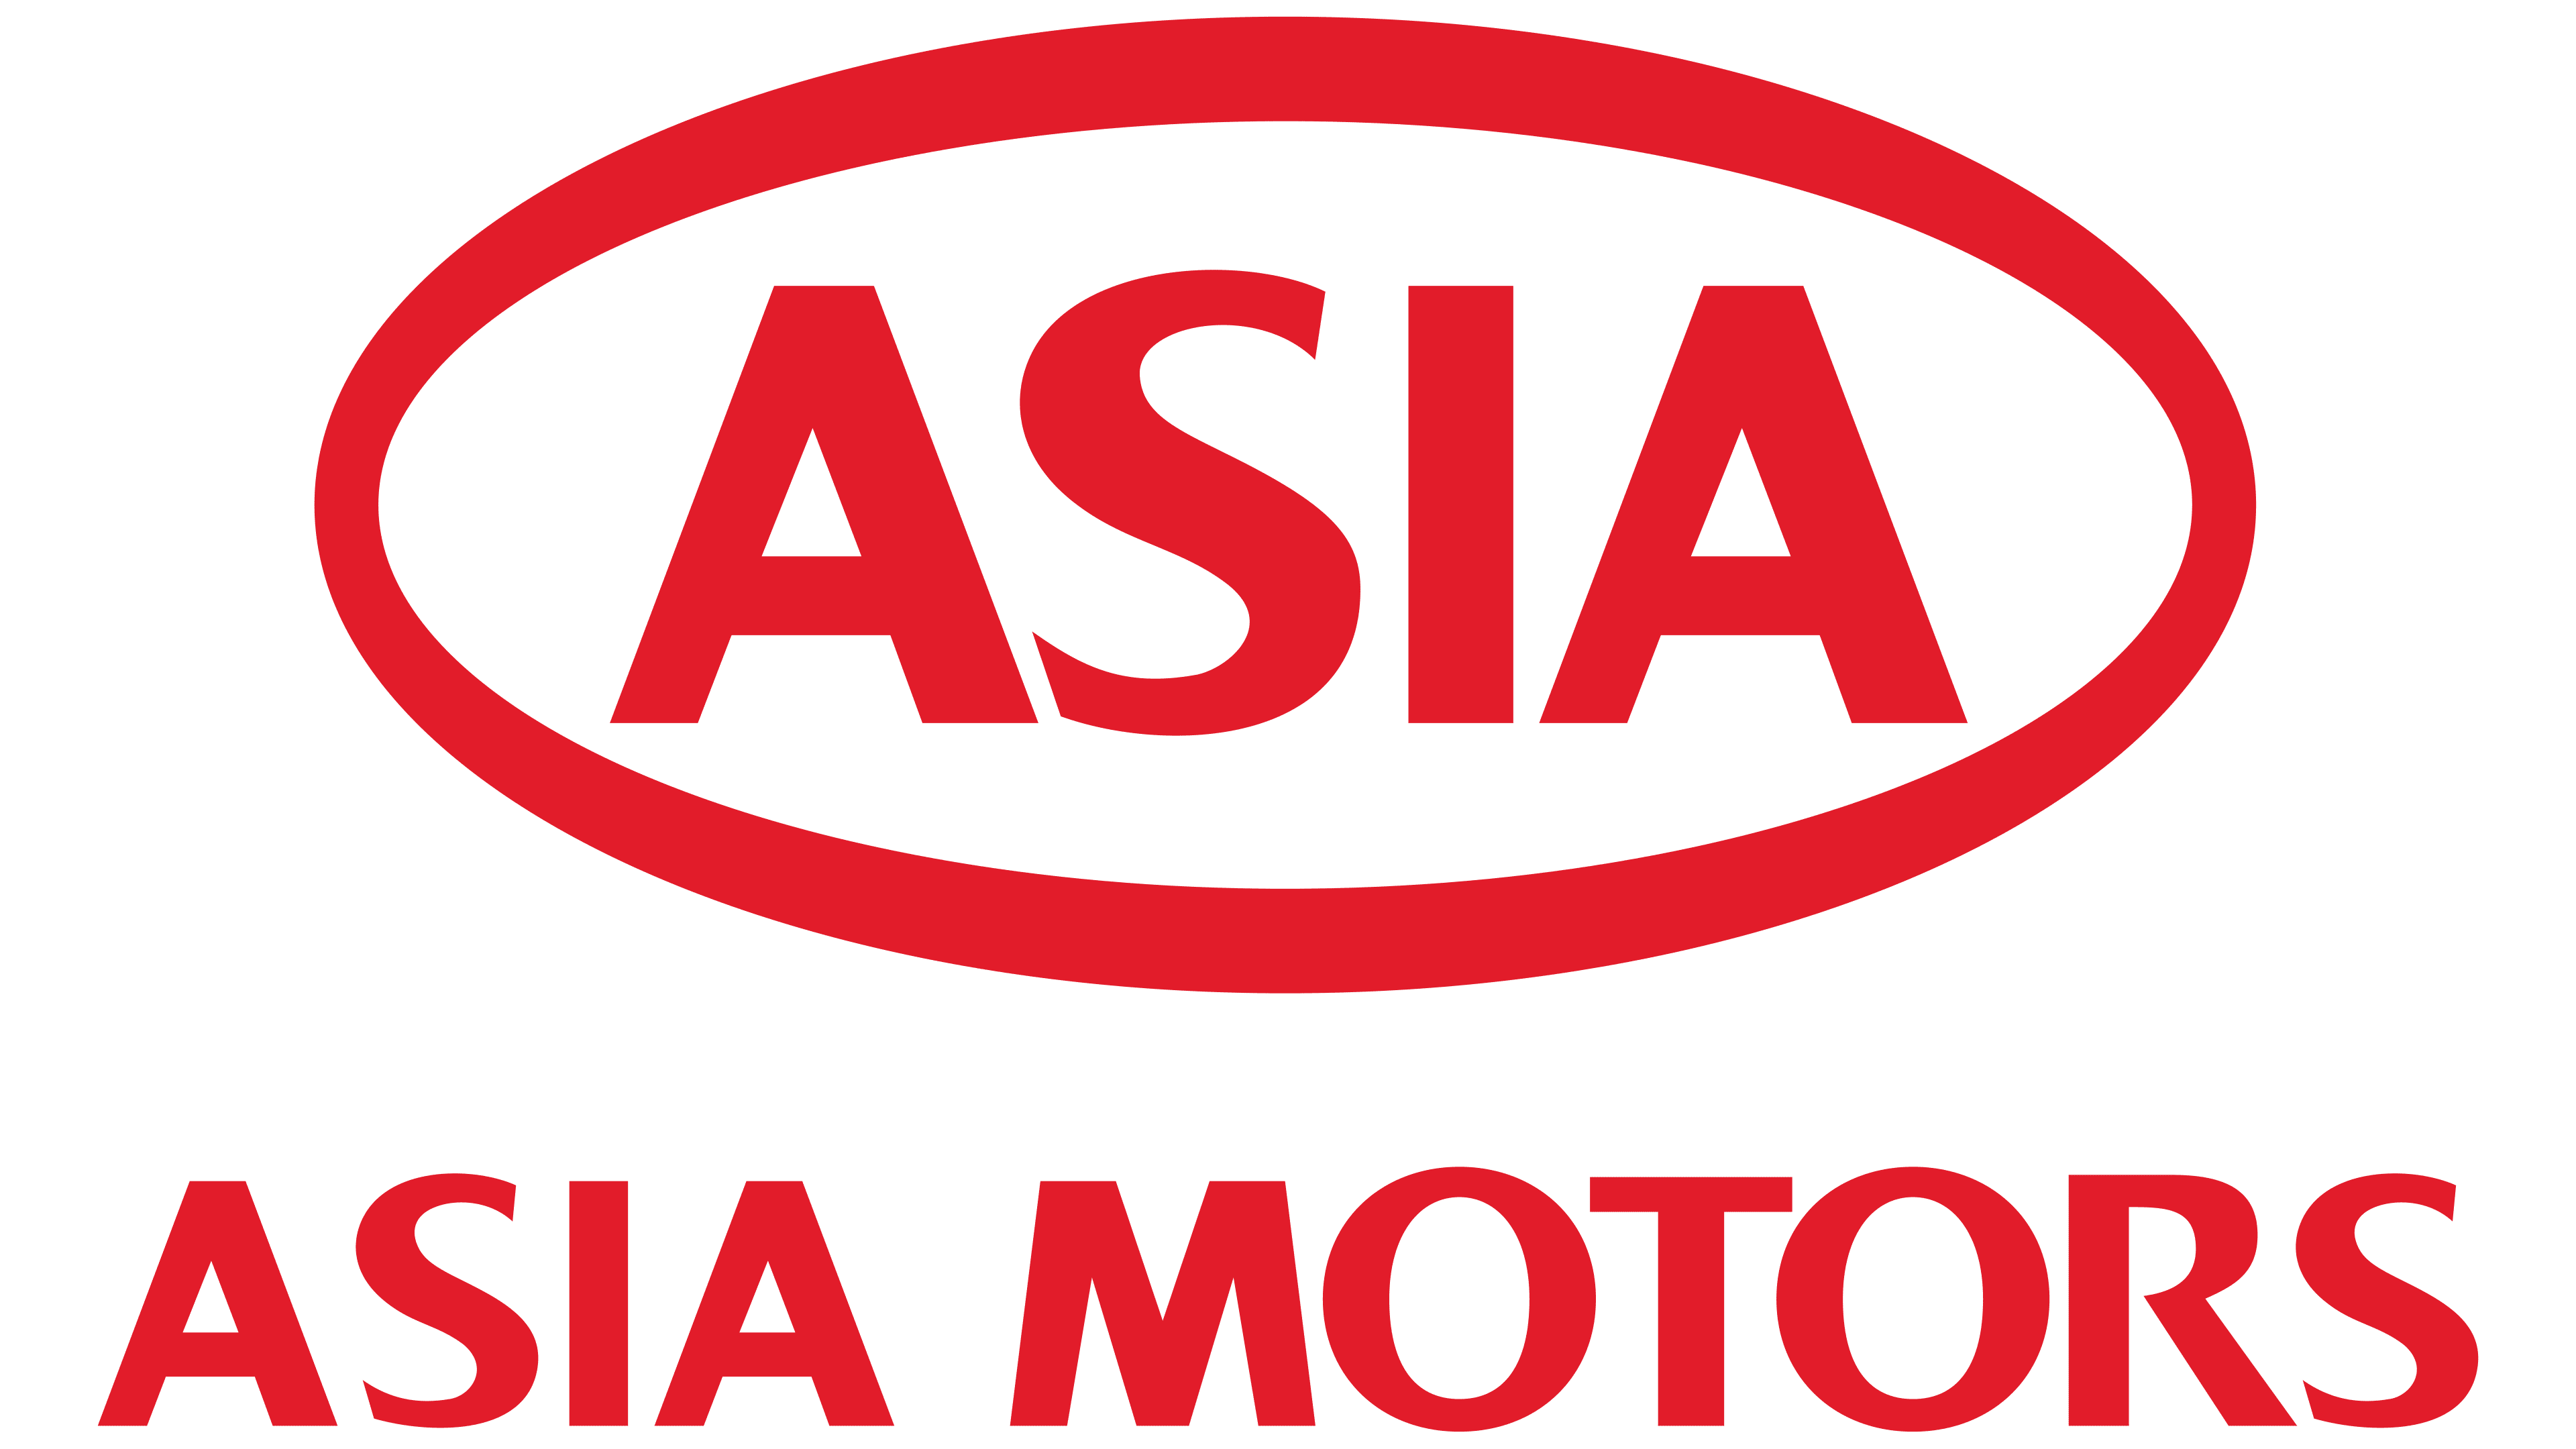 Asia Motors Transparent PNG Logo